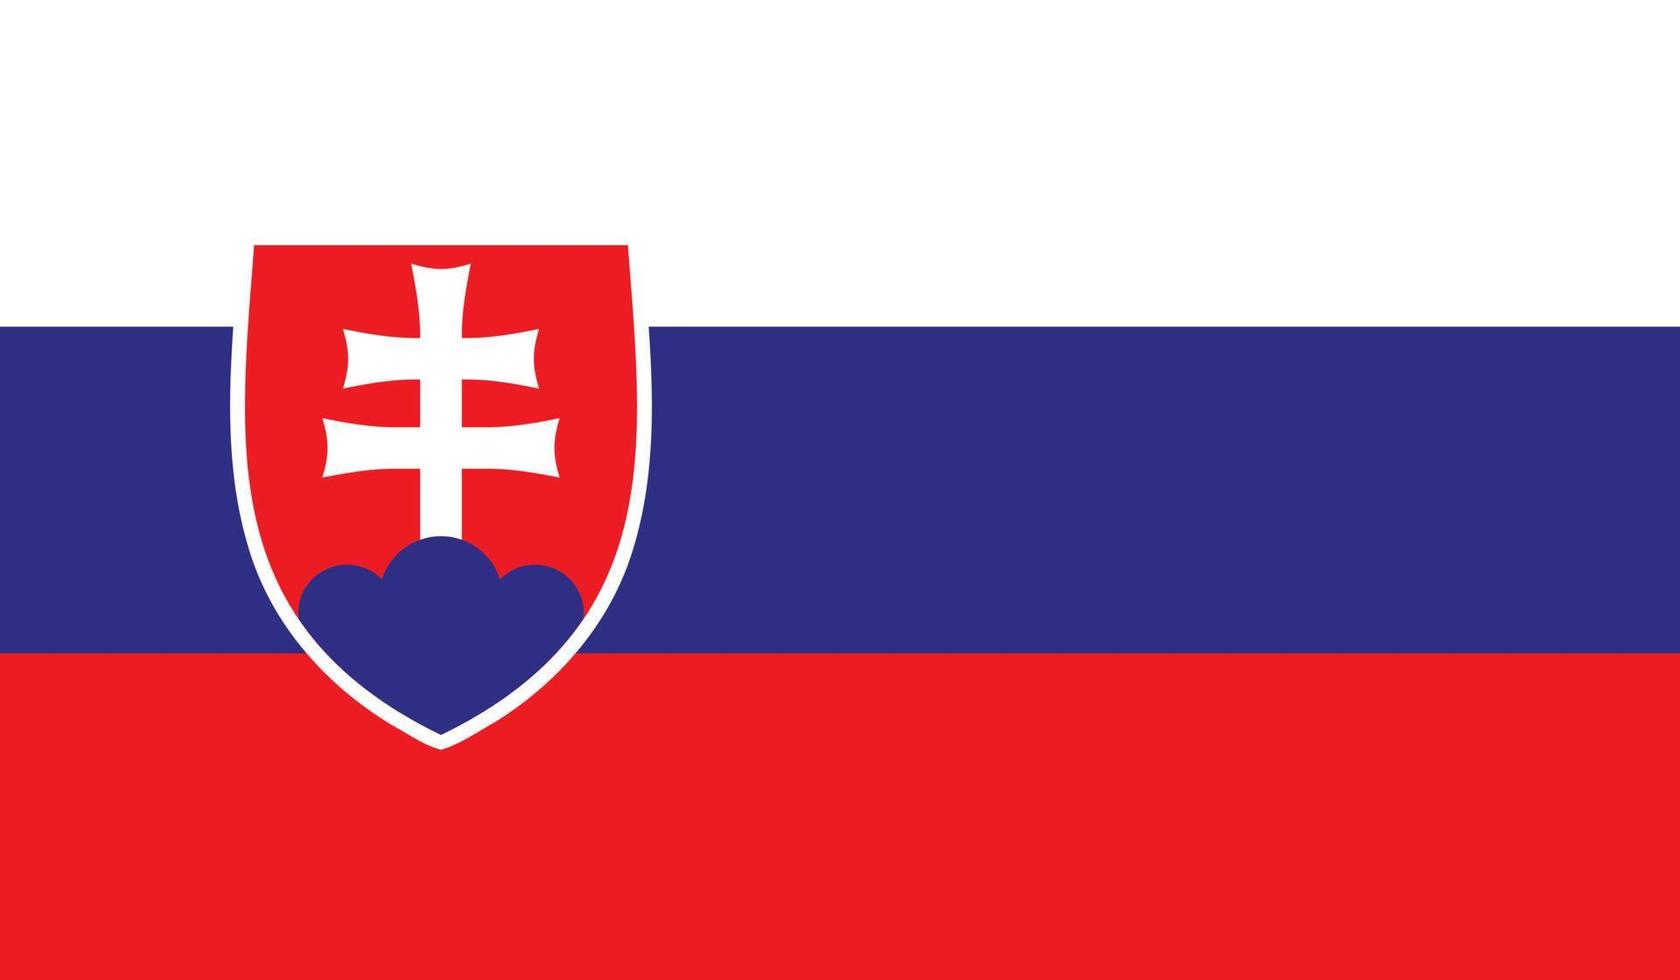 Slovakia flag image vector